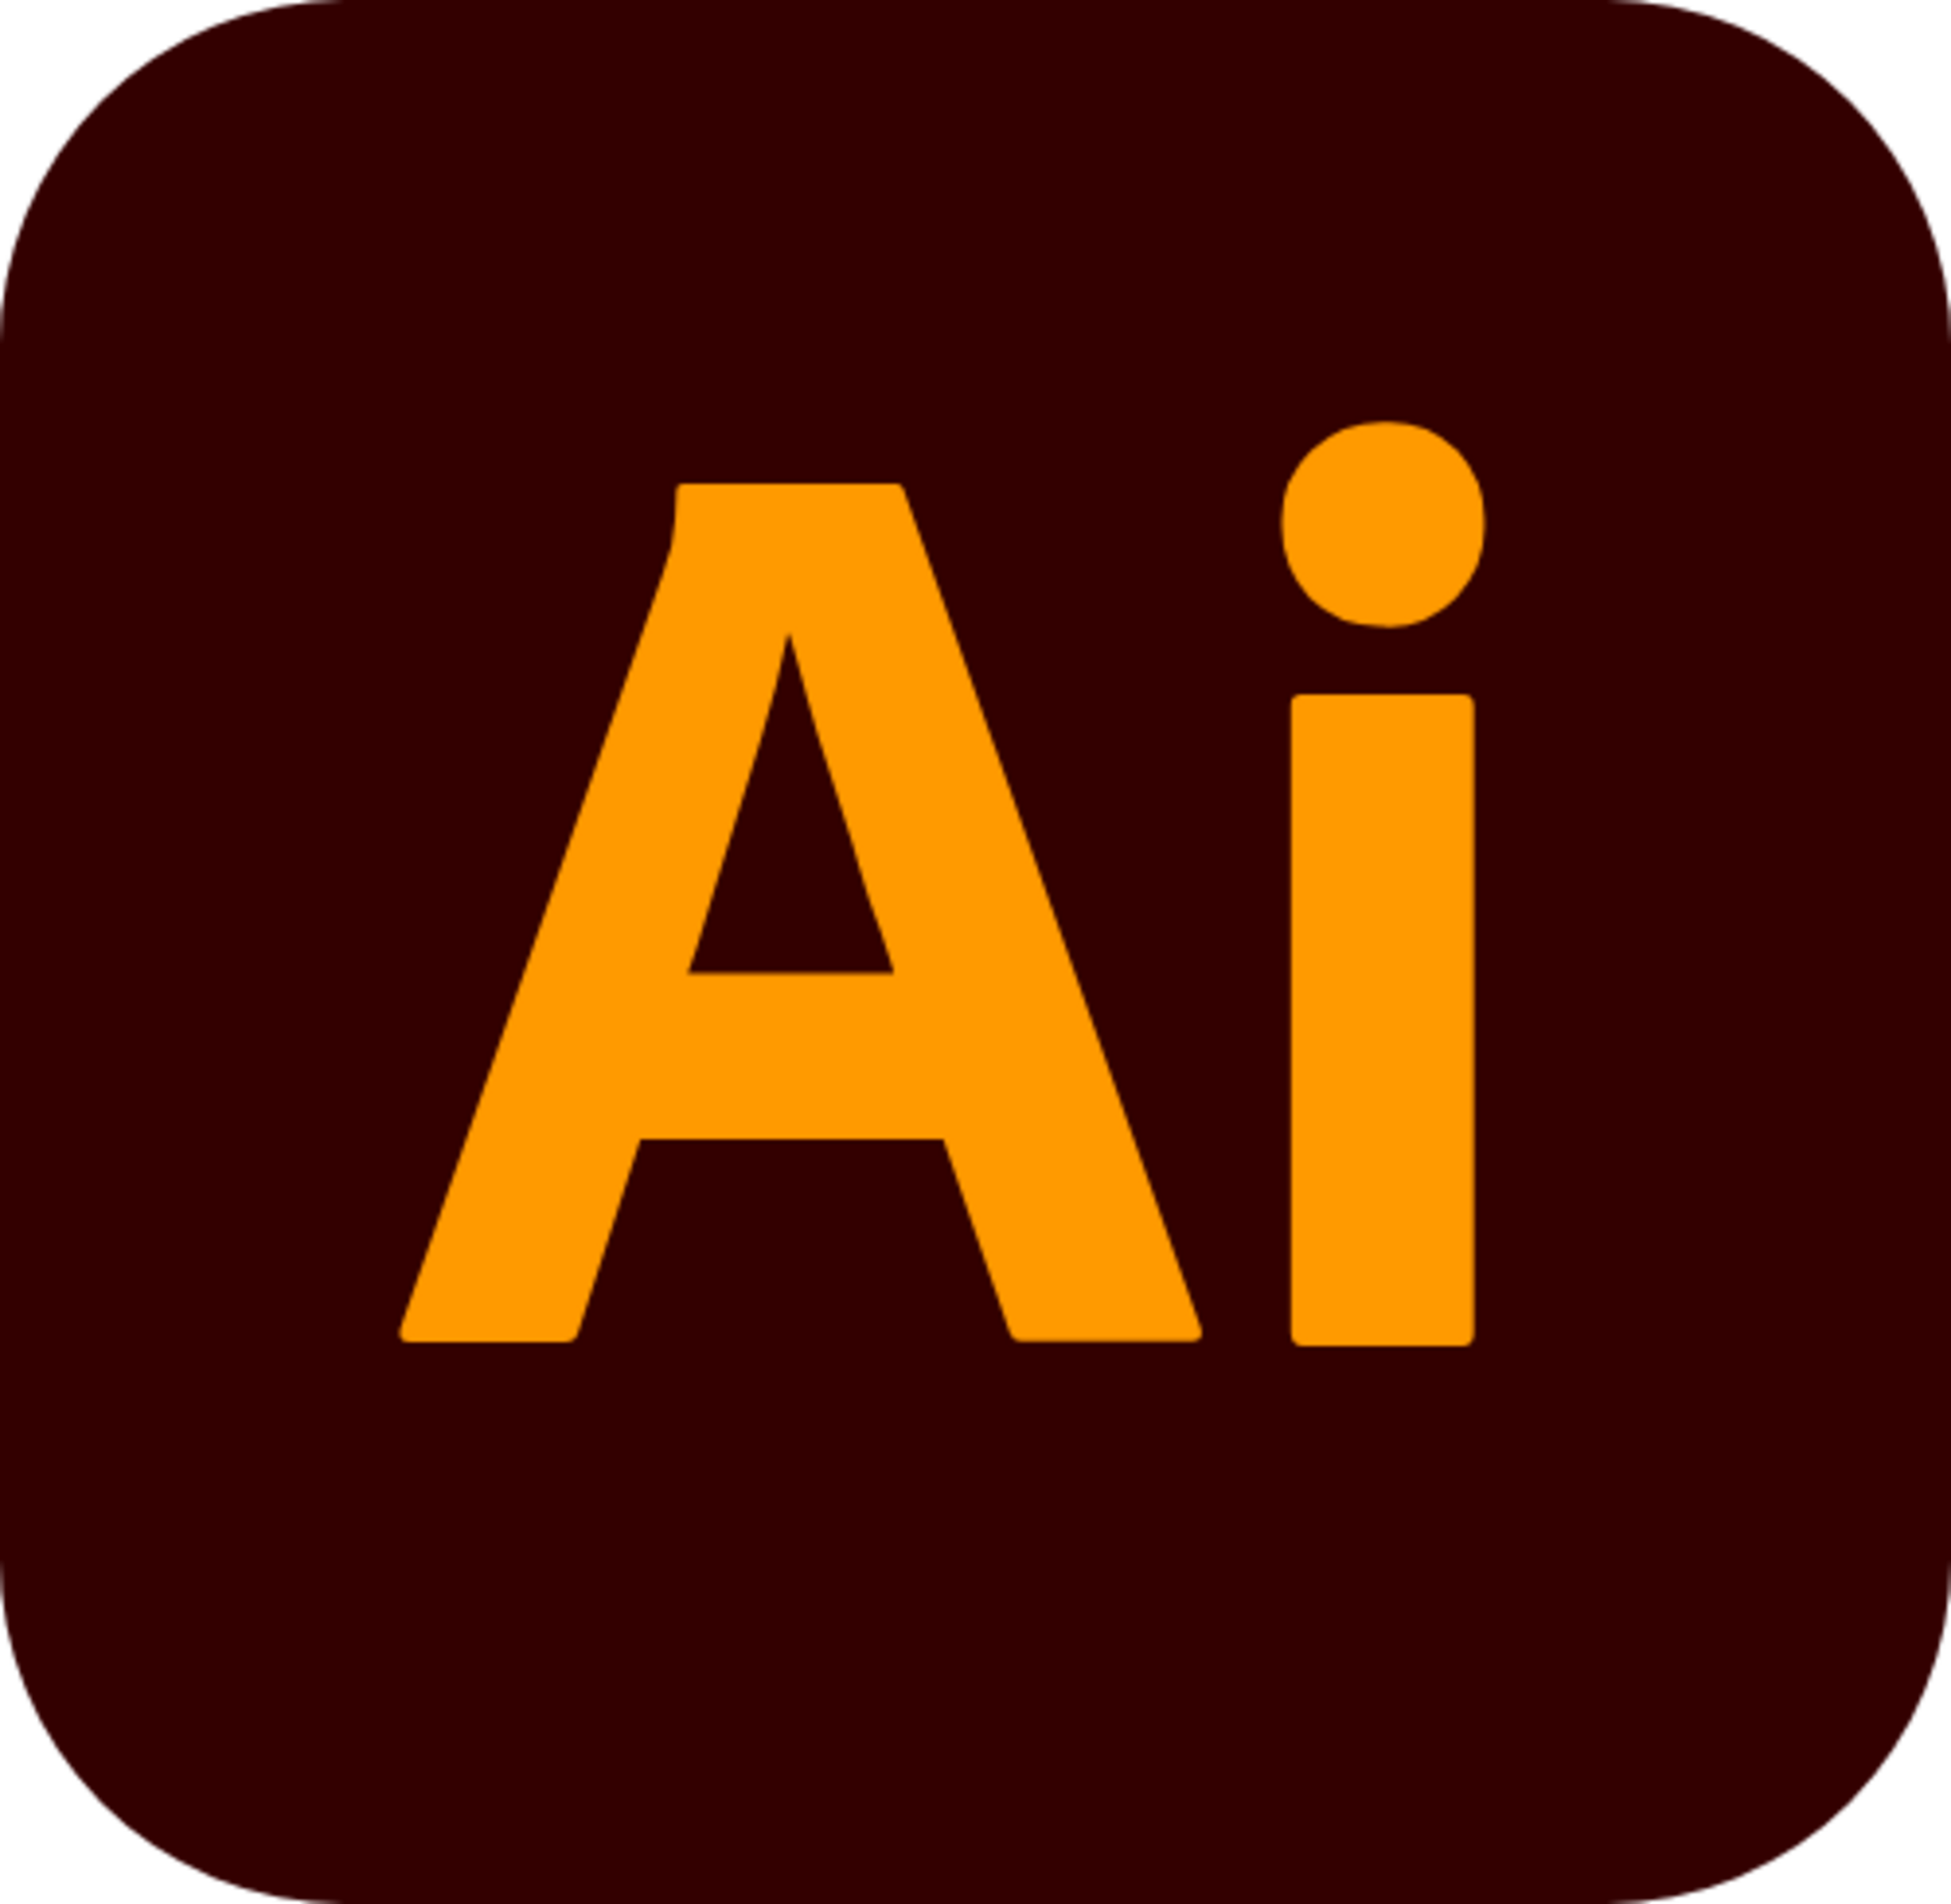 Adobe Illustrator icon